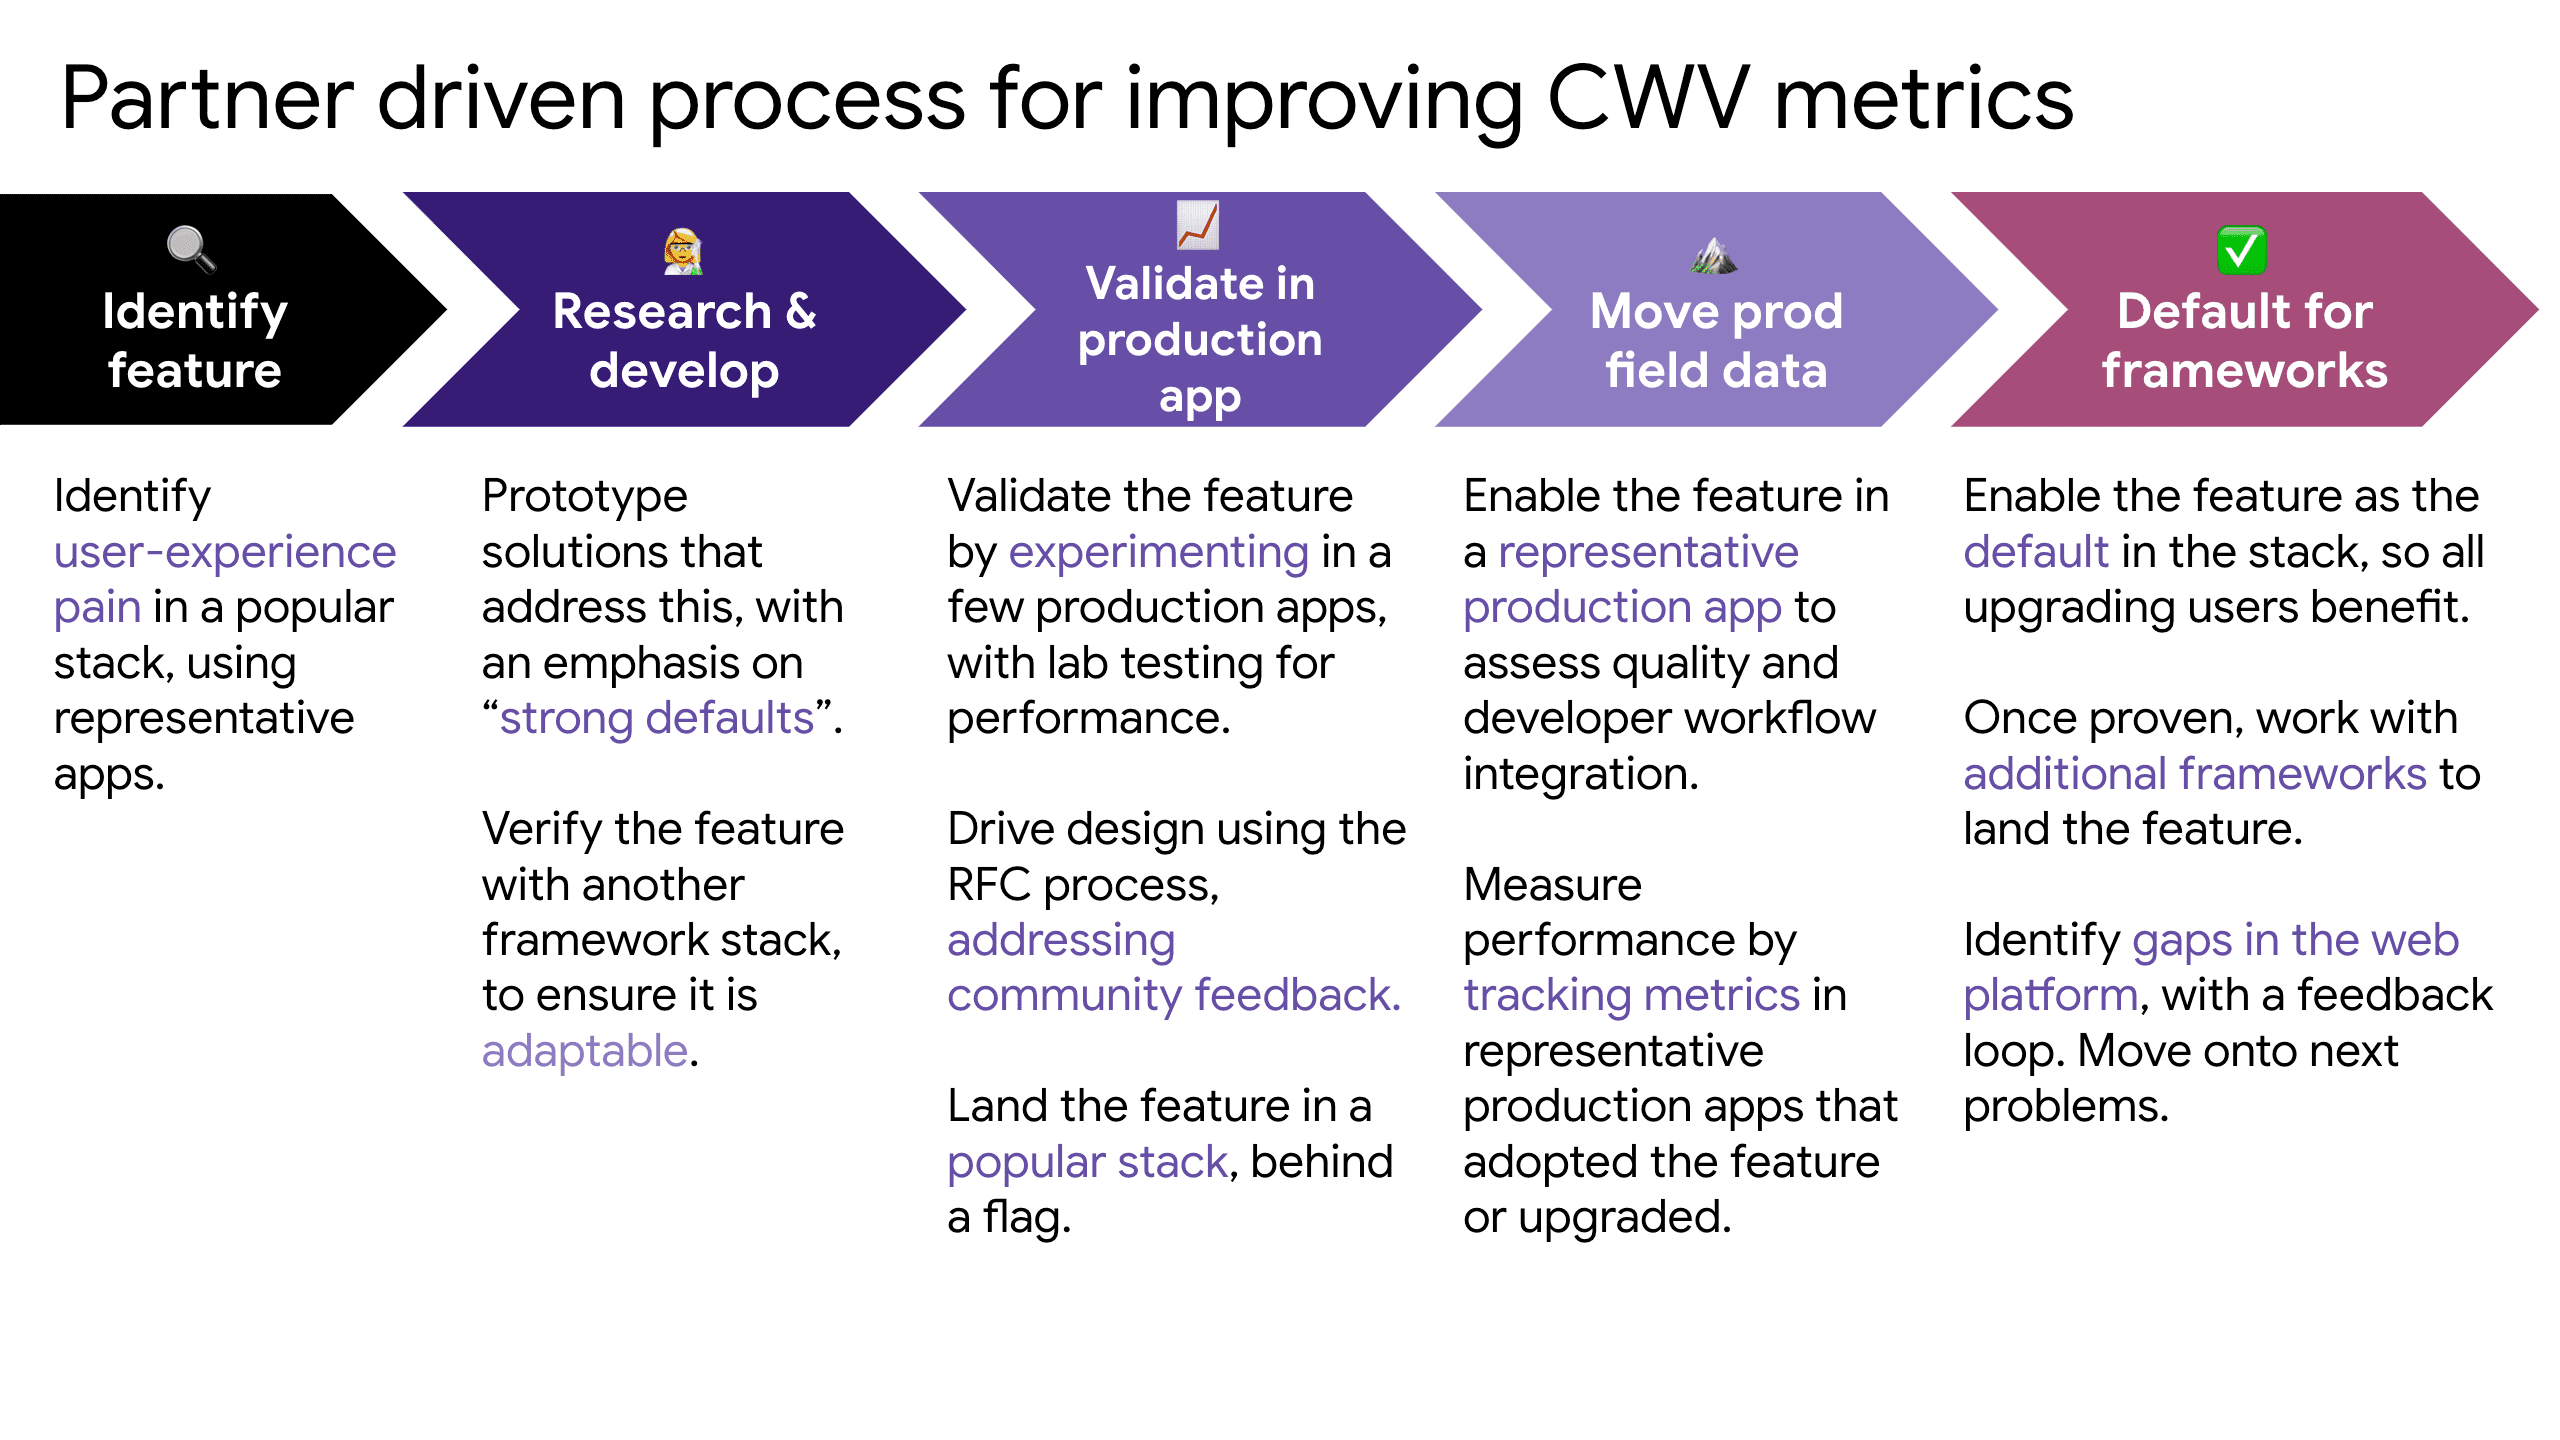 Aurora's partner driven process for improving Core Web Vital metrics